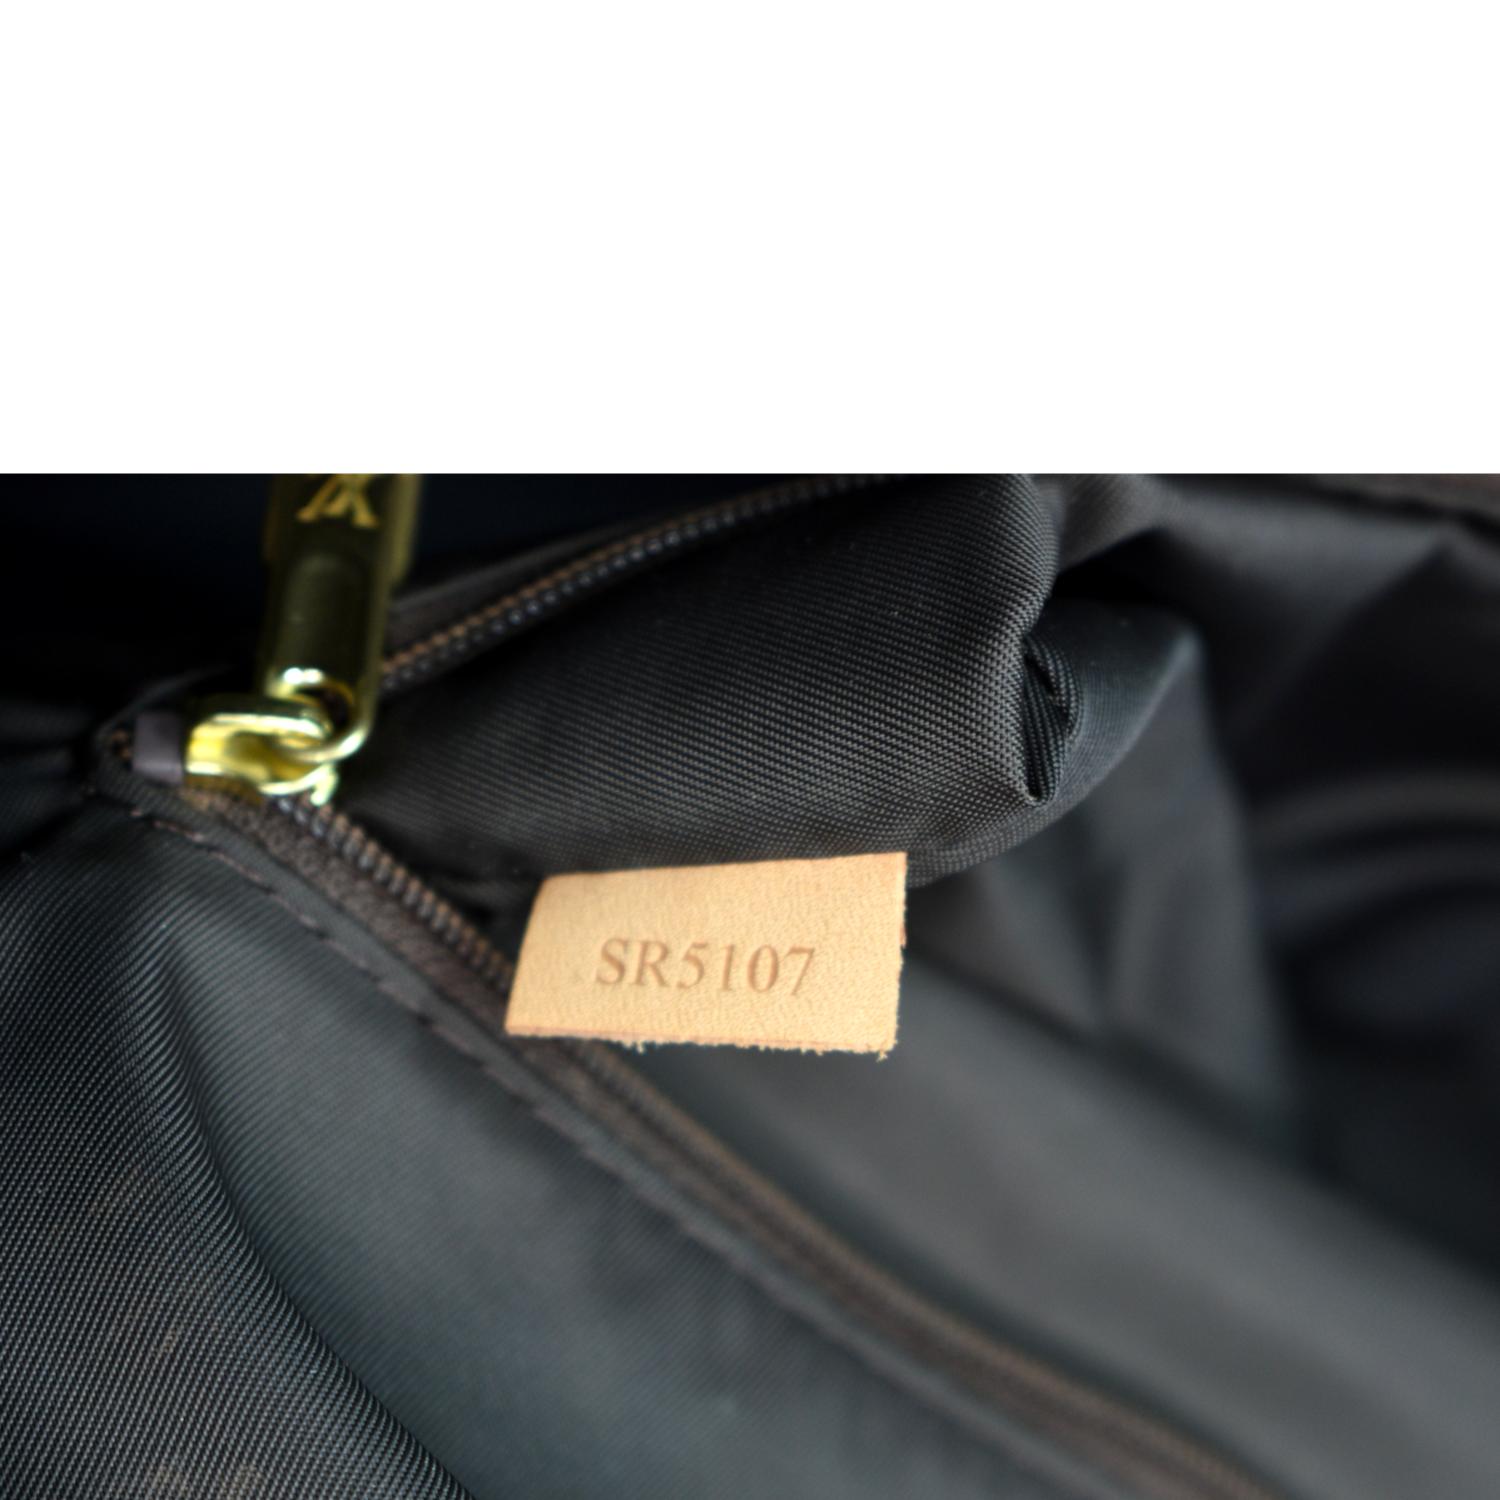 Louis Vuitton Neo Eole Travel Luggage Bag - Farfetch